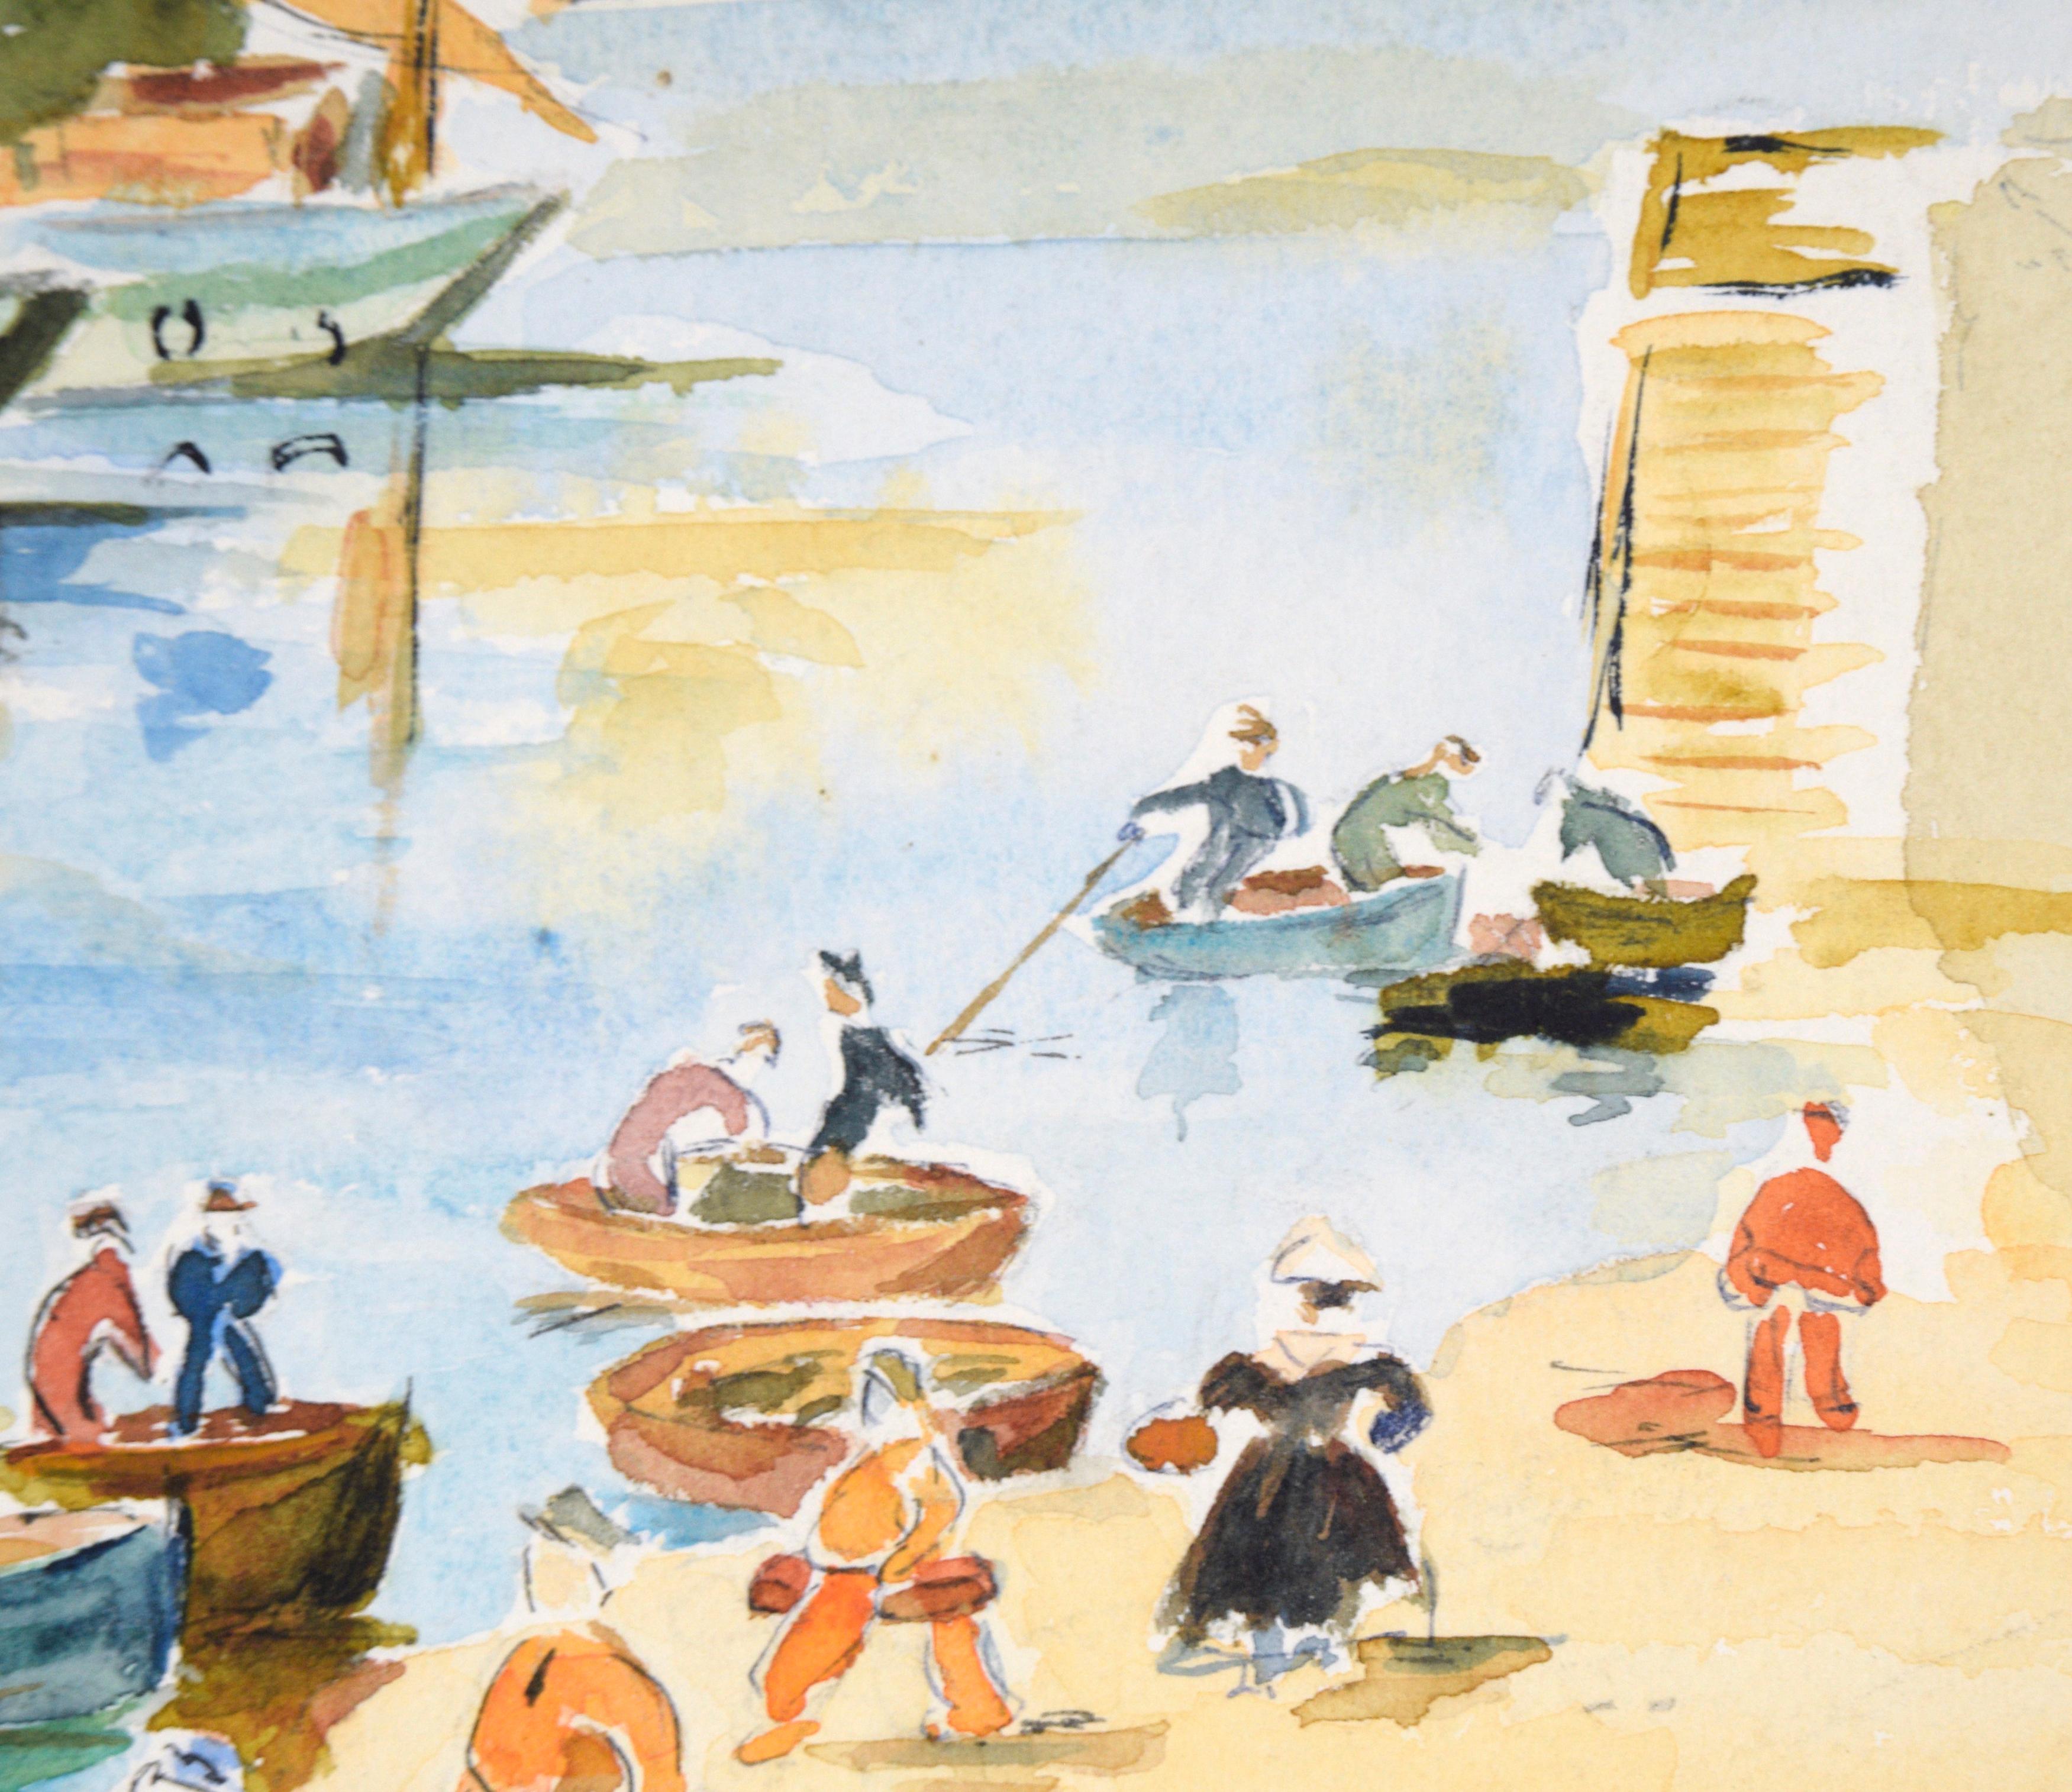 Fishermen at the Shore in Concarneau - France Landscape by M. Saint-Guily - Beige Figurative Art by Edouard Doigneau